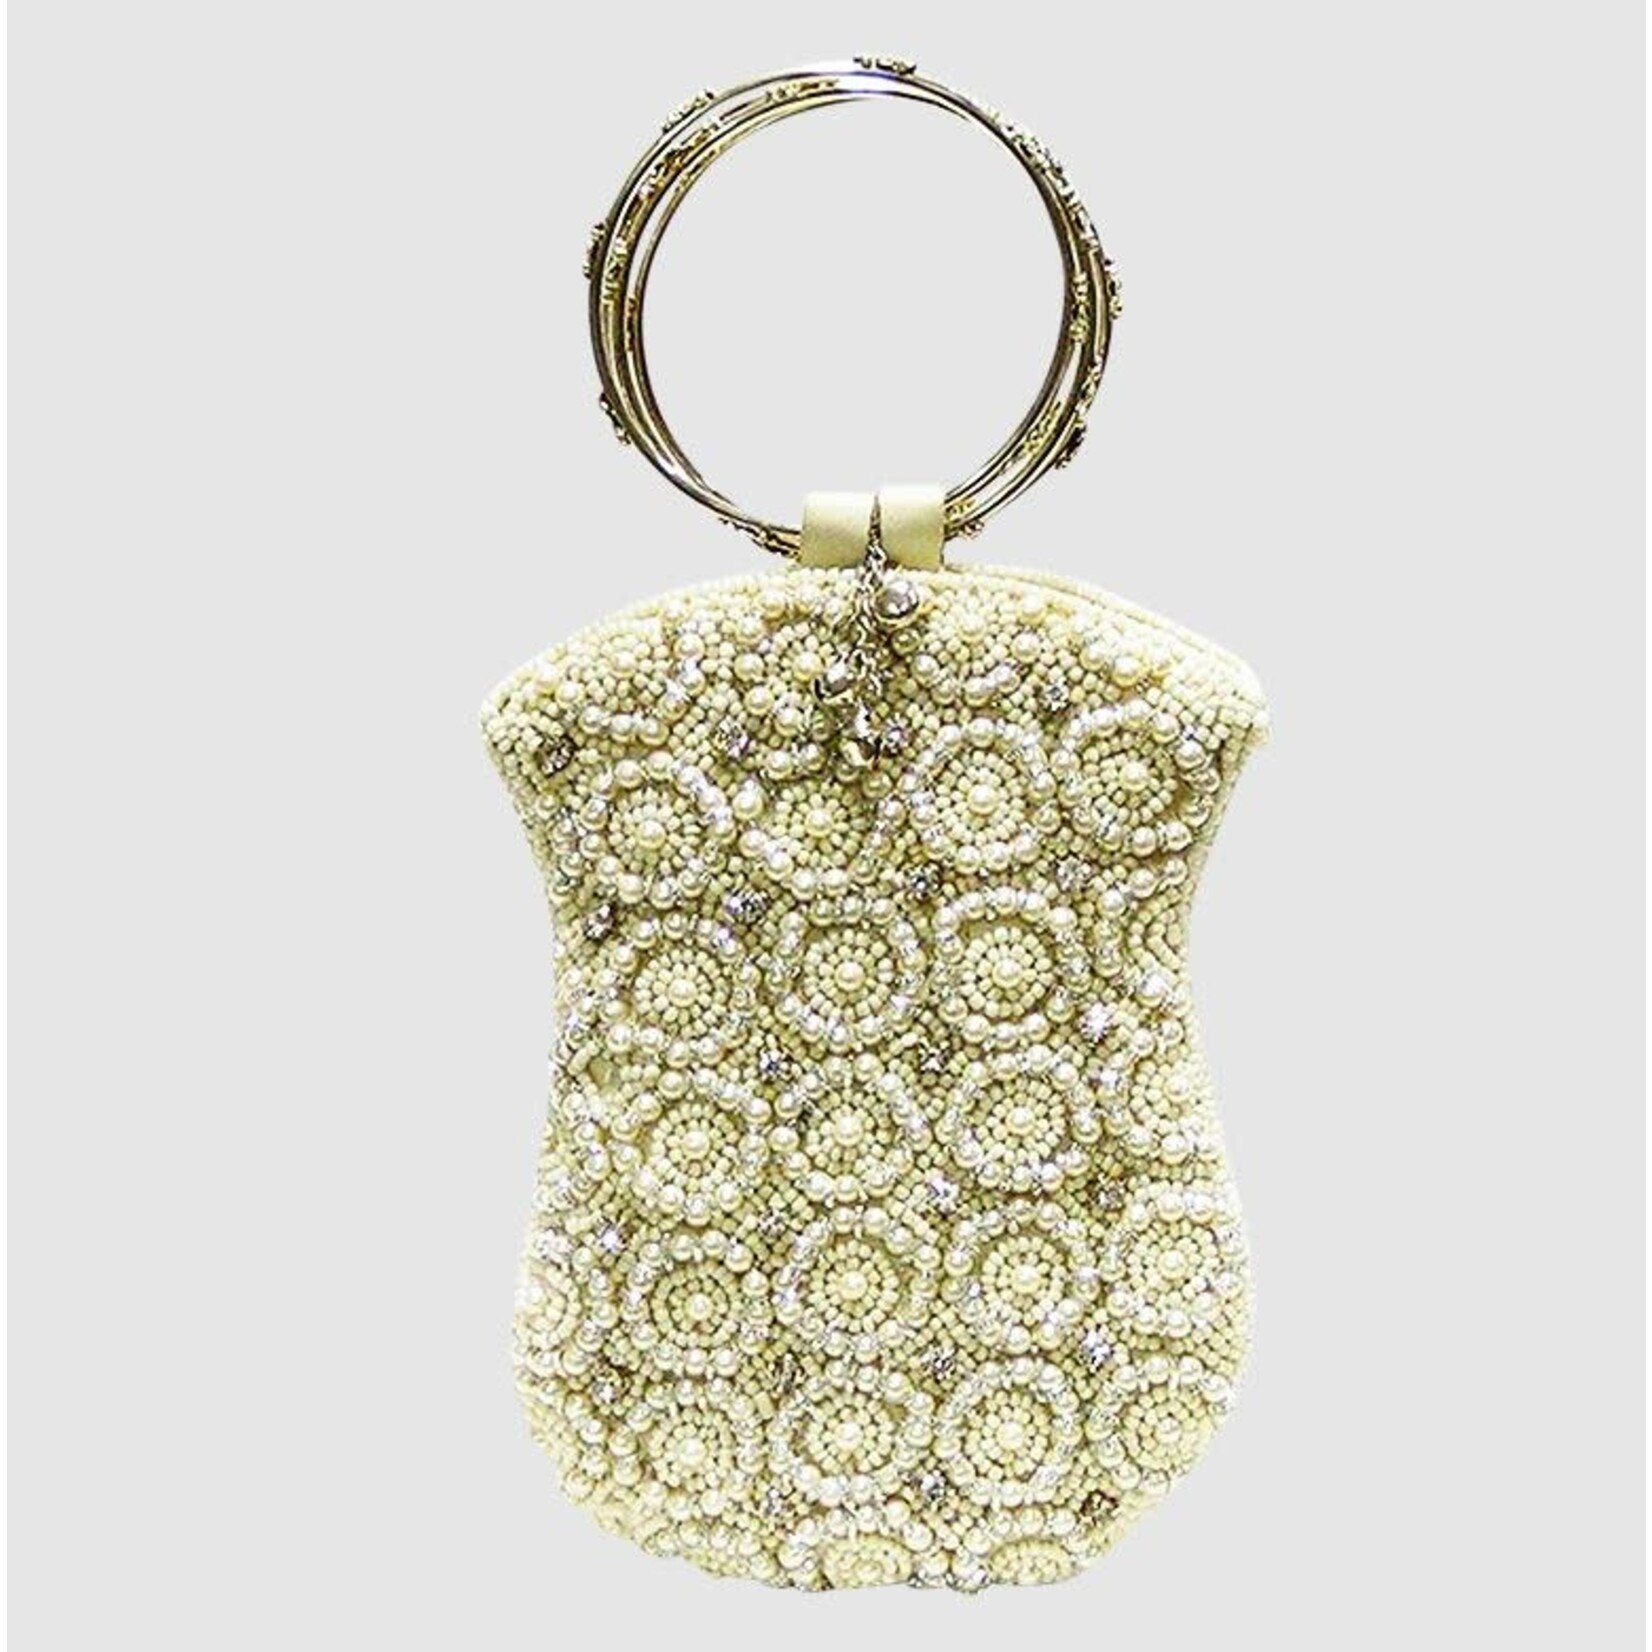 David Jeffery Ivory Beads Clear Stones & Pearls with Ring Handle Handbag